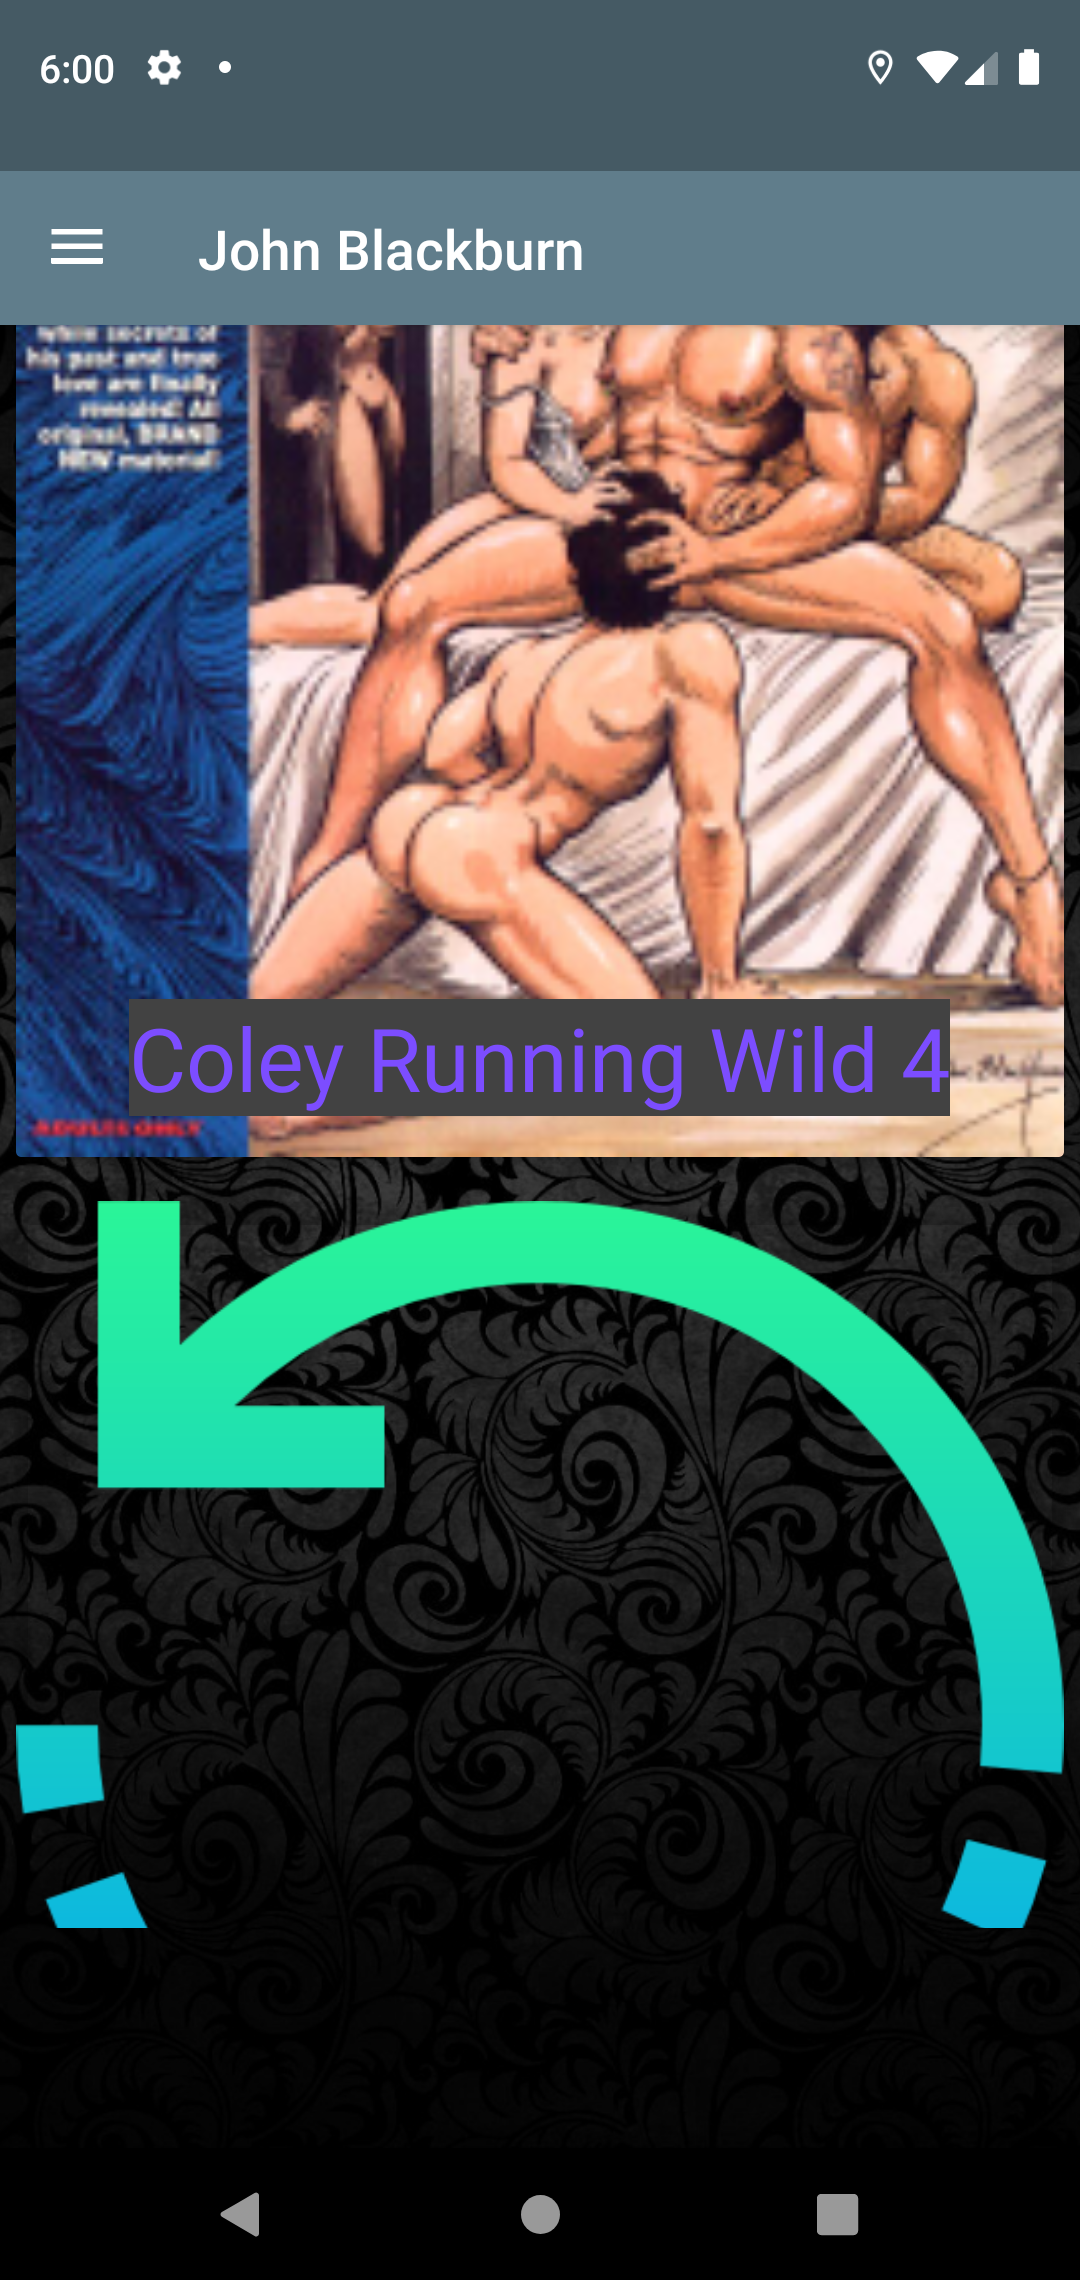 Coley Running Wild images,bondage,yaoi,app,gallery,browser,john,pics,comic,galleries,photo,hentai,apps,blackburn,sexy,good,pic,live,porn,phone,pornstar,apk,best,wallpaper,comics,gay